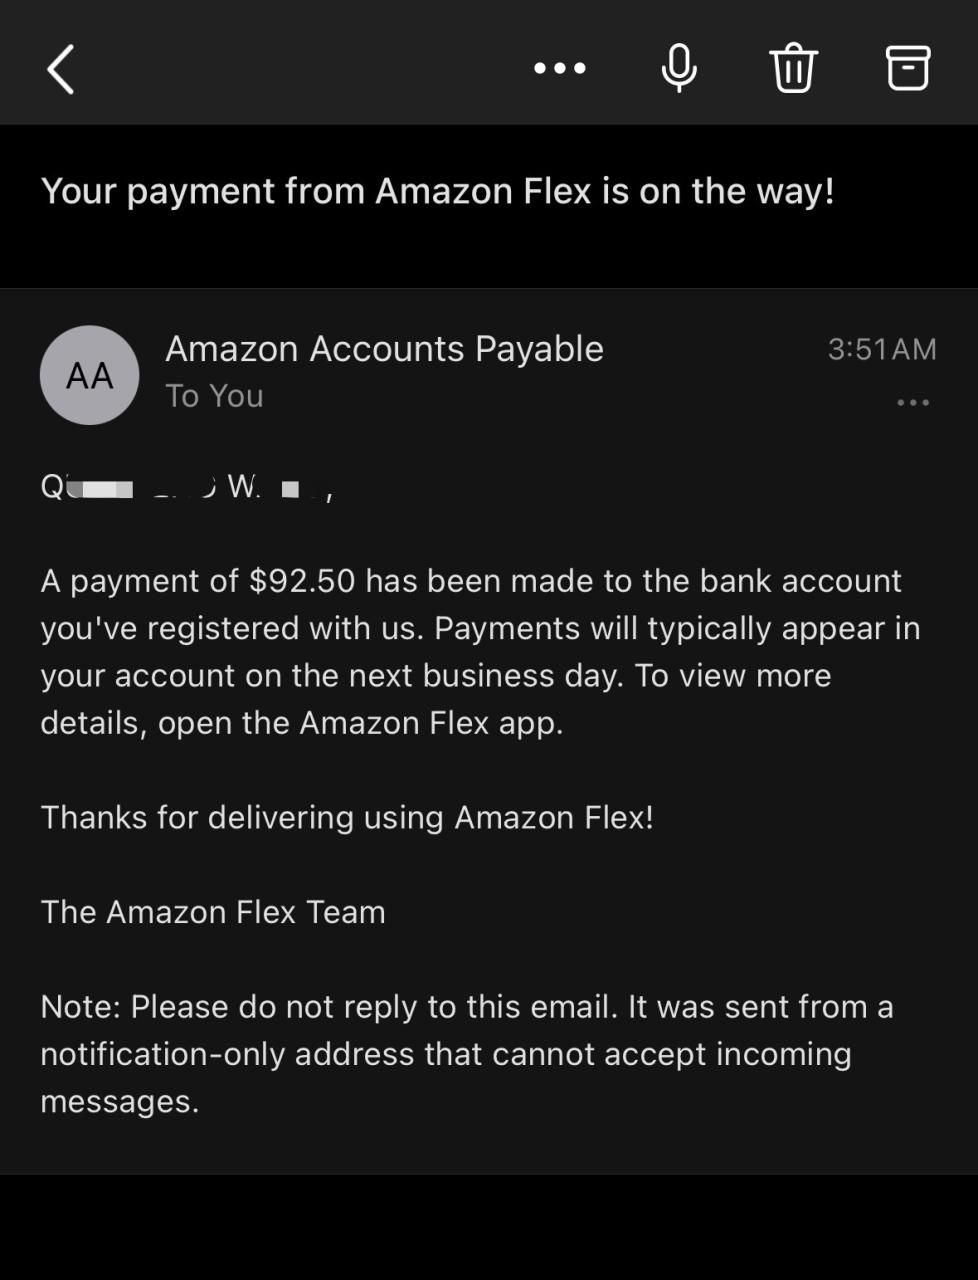 Amazon Flex发来的邮件，通知正在付款（92.5美元）